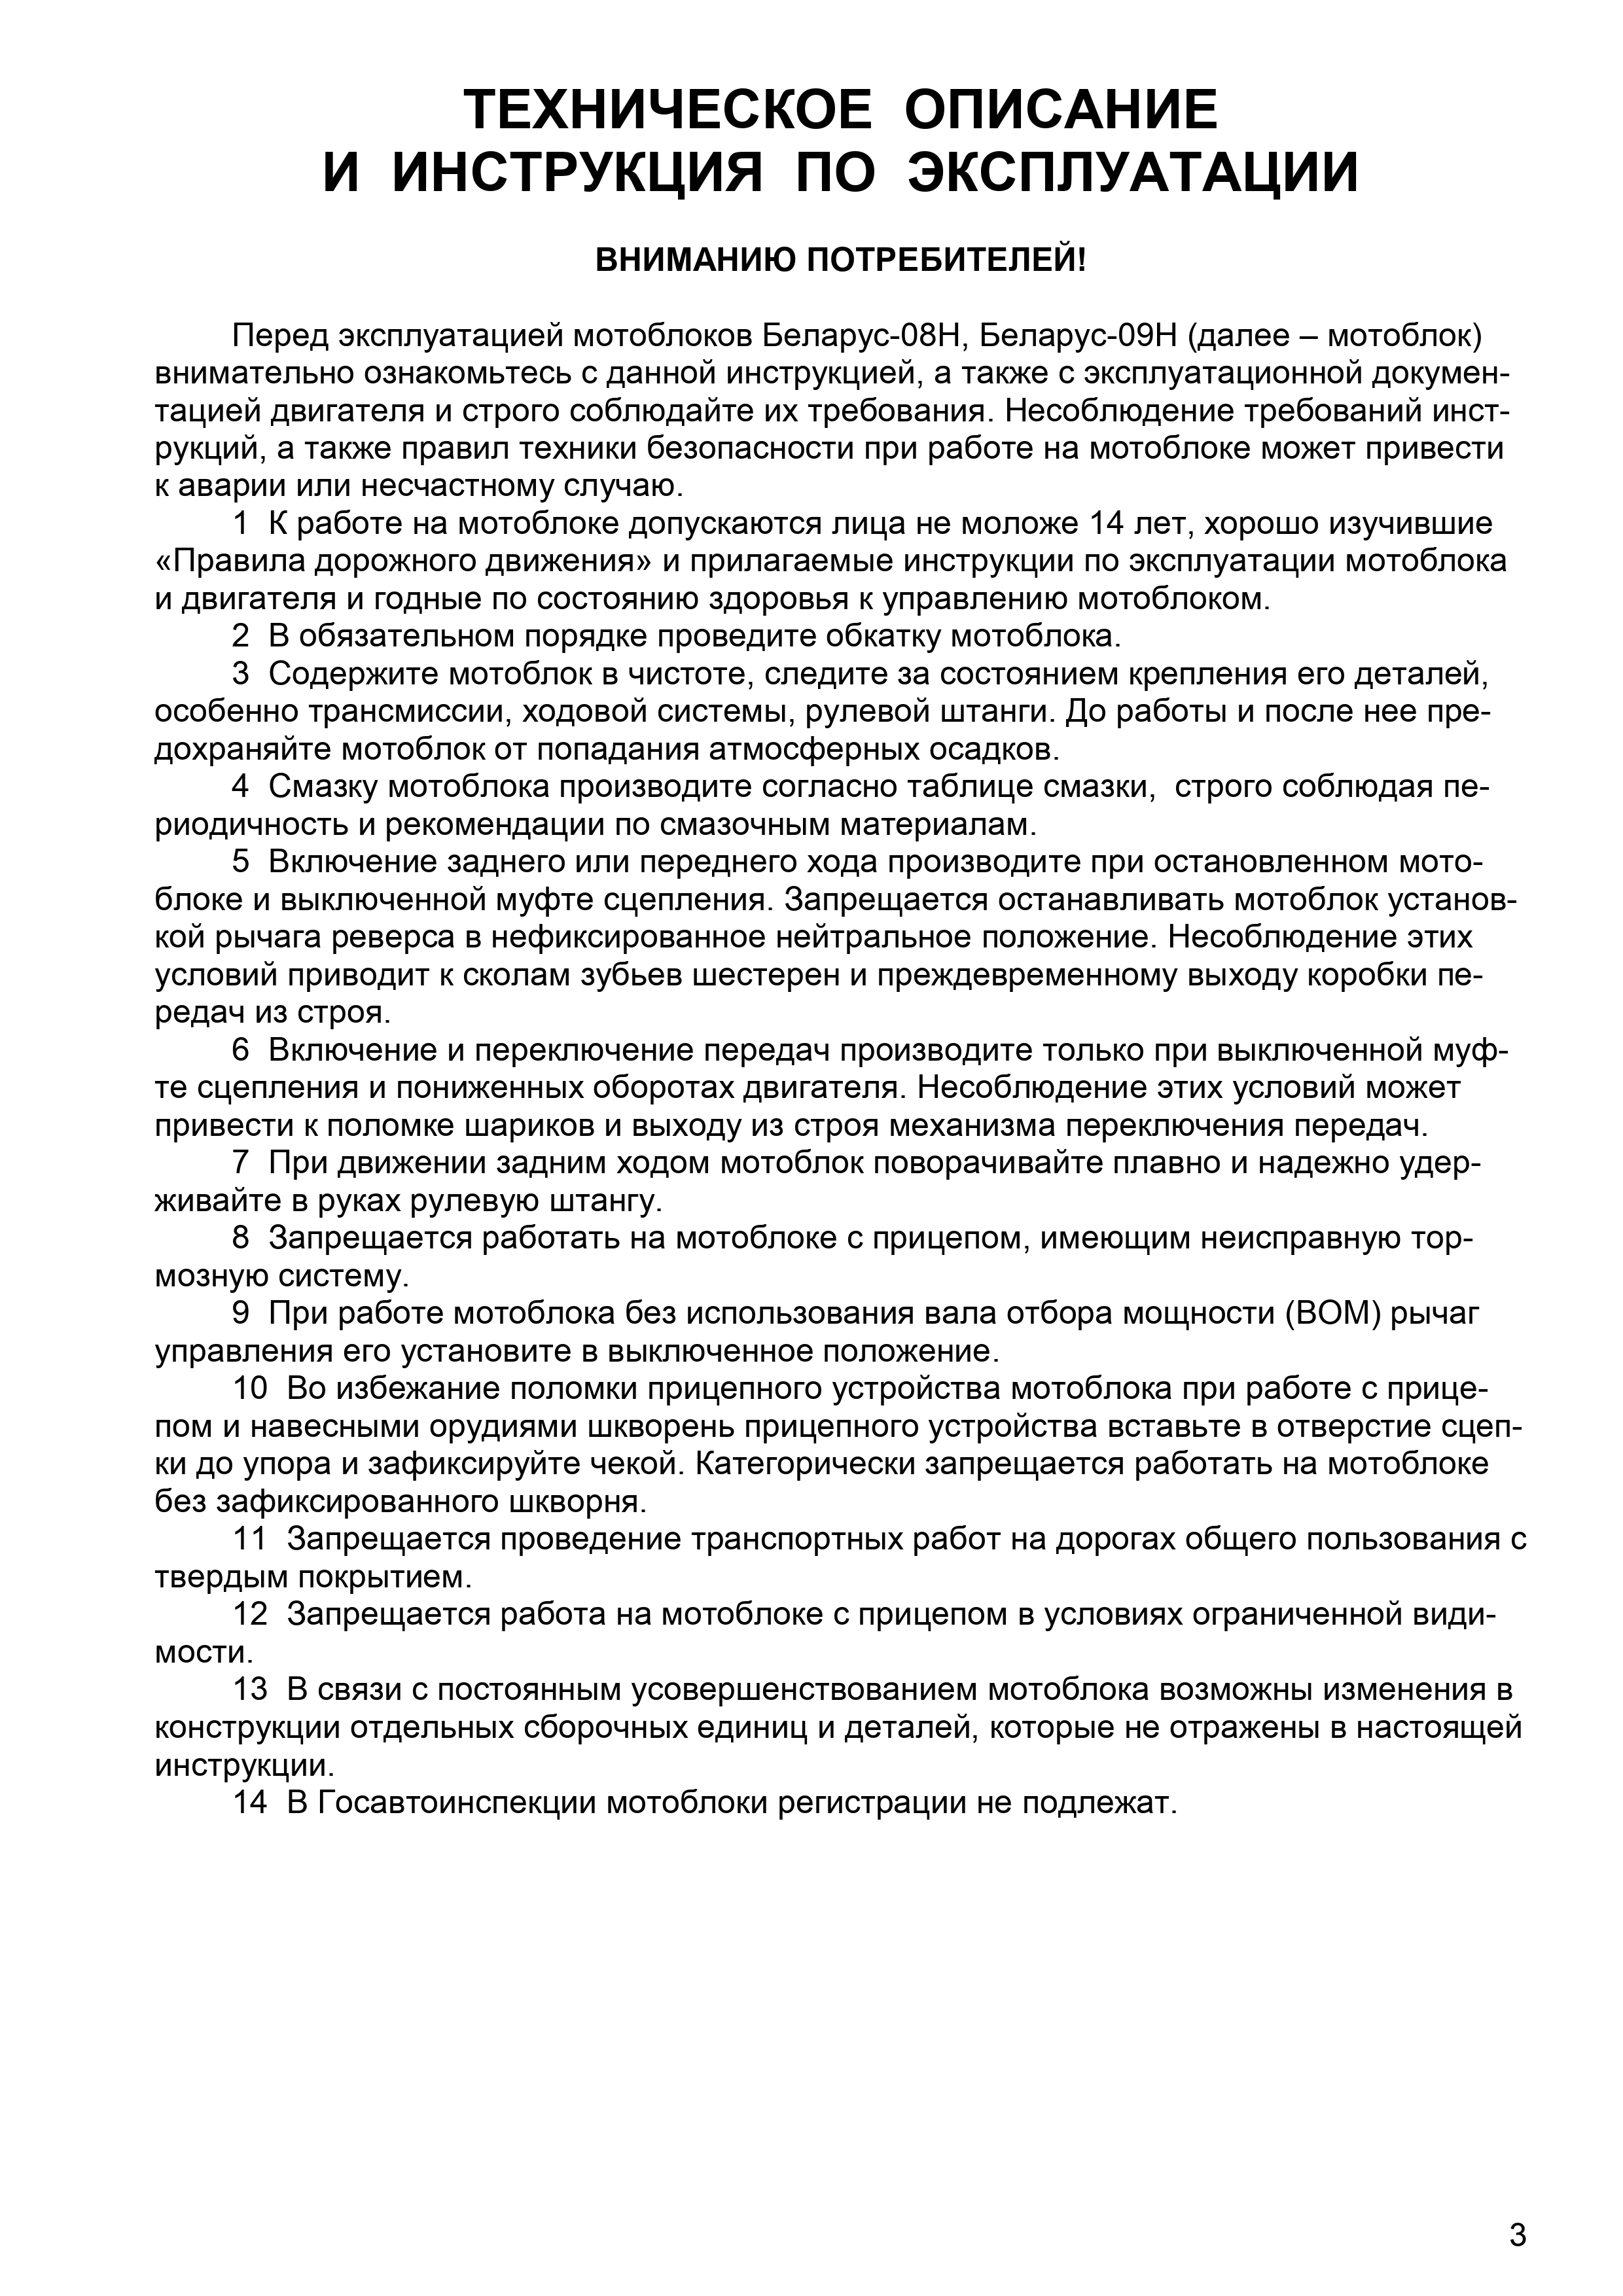 belarus_09h_manual i catalog (1)_page-0003